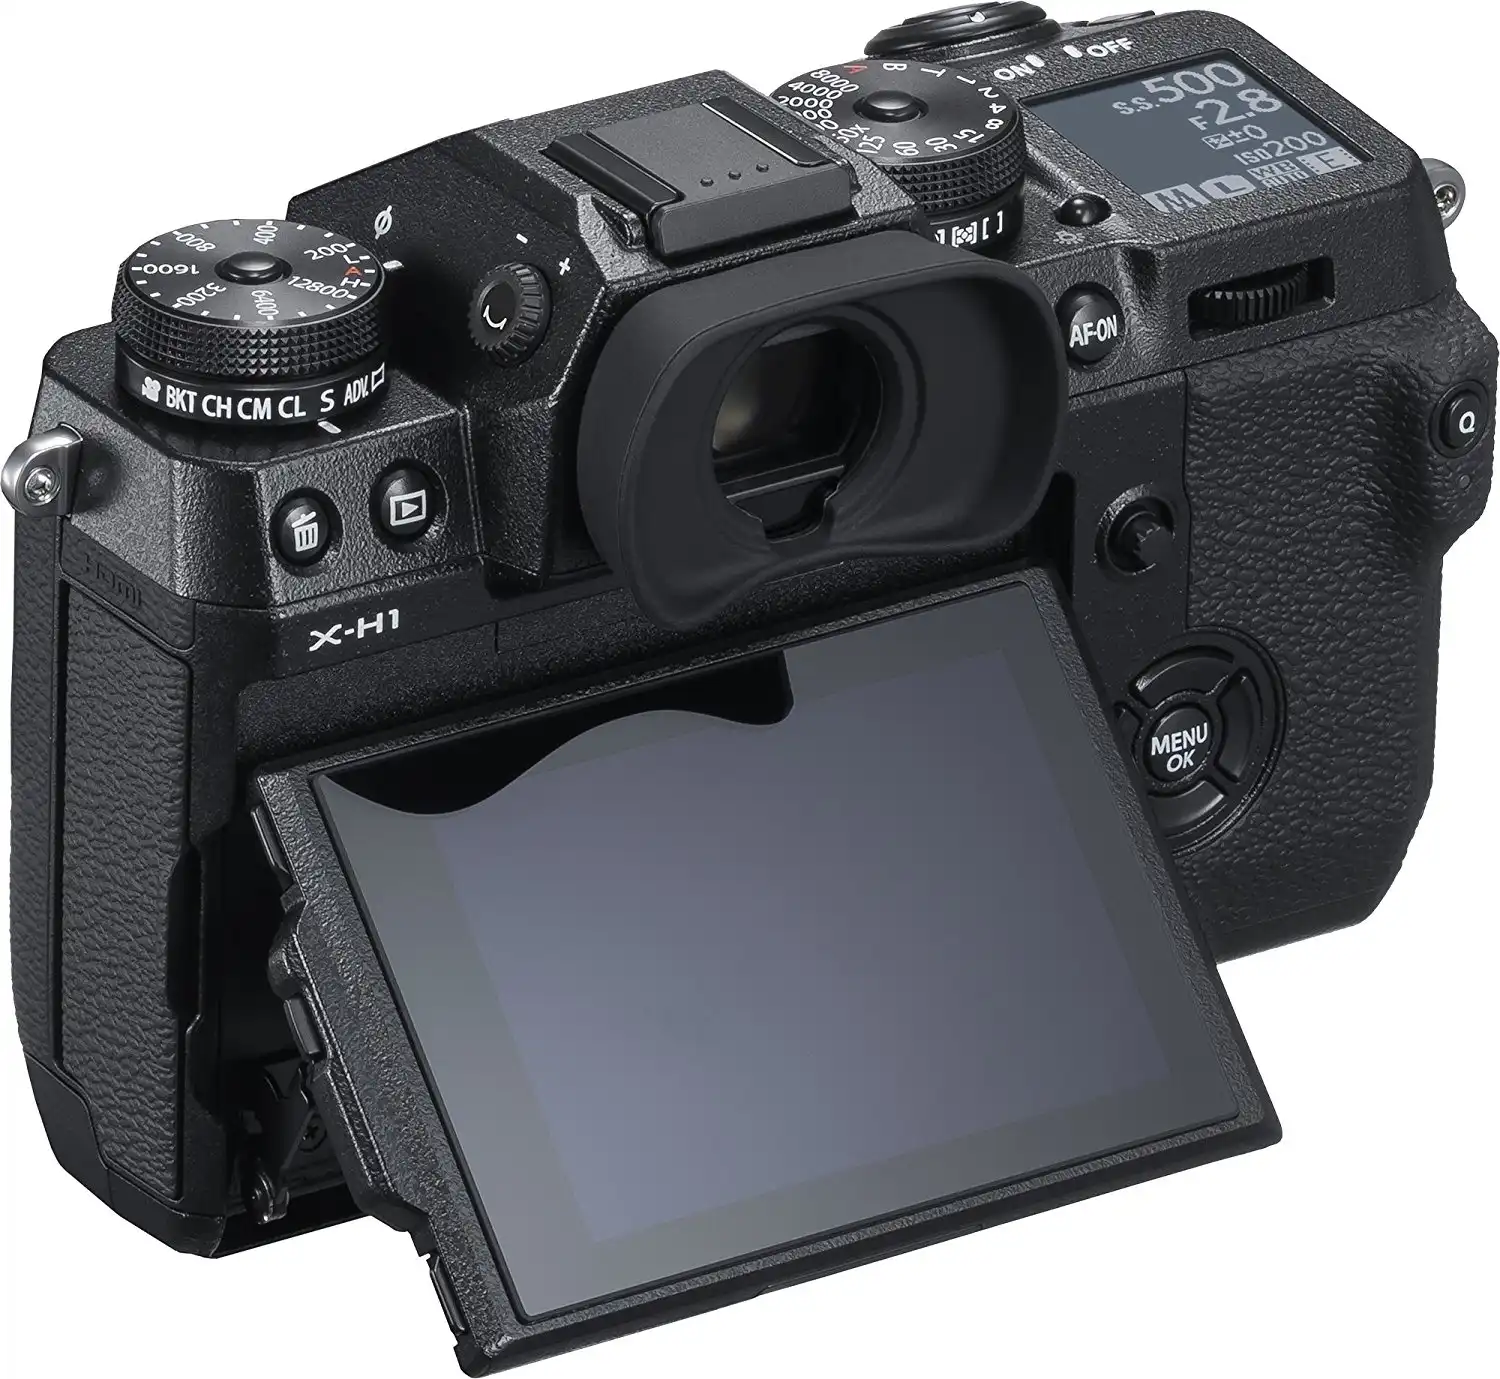 Indiener Machtigen Verandert in Fujifilm X-H1 vs Panasonic Lumix G9: Which is the Better Camera for  Enthusiasts?